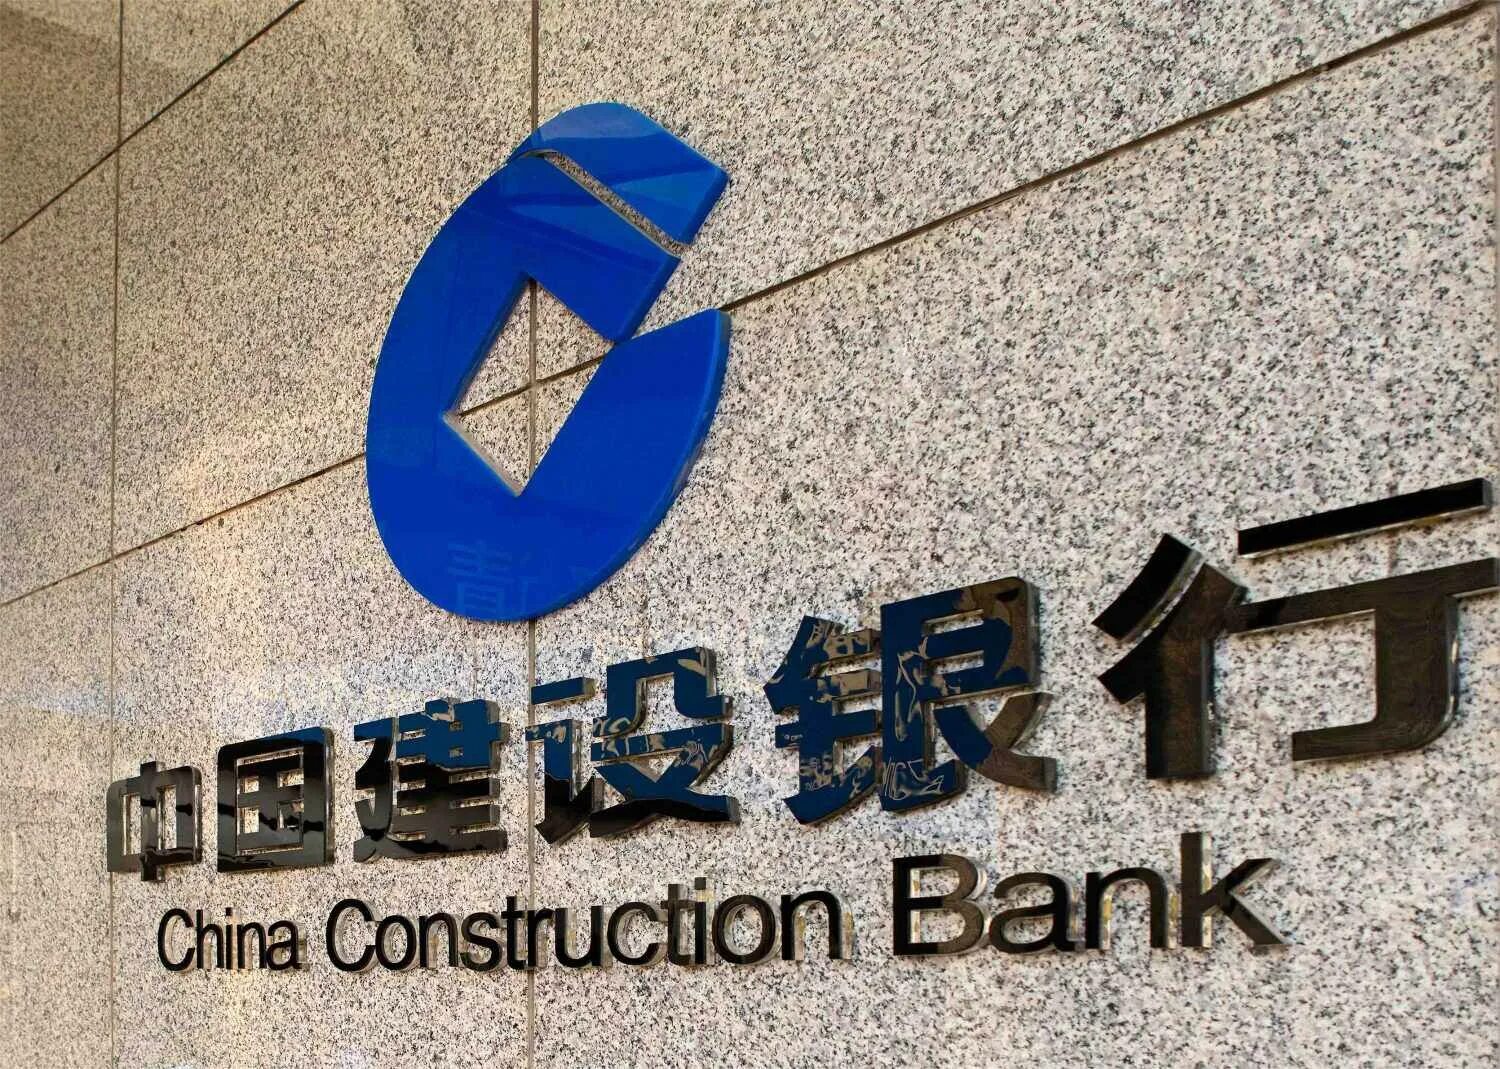 China construction bank swift. Чайна Констракшн банк. Строительный банк Китая China Construction Bank CCB. China Construction Bank (ССВ) ("строительный банк Китая"). China Construction Bank лого.